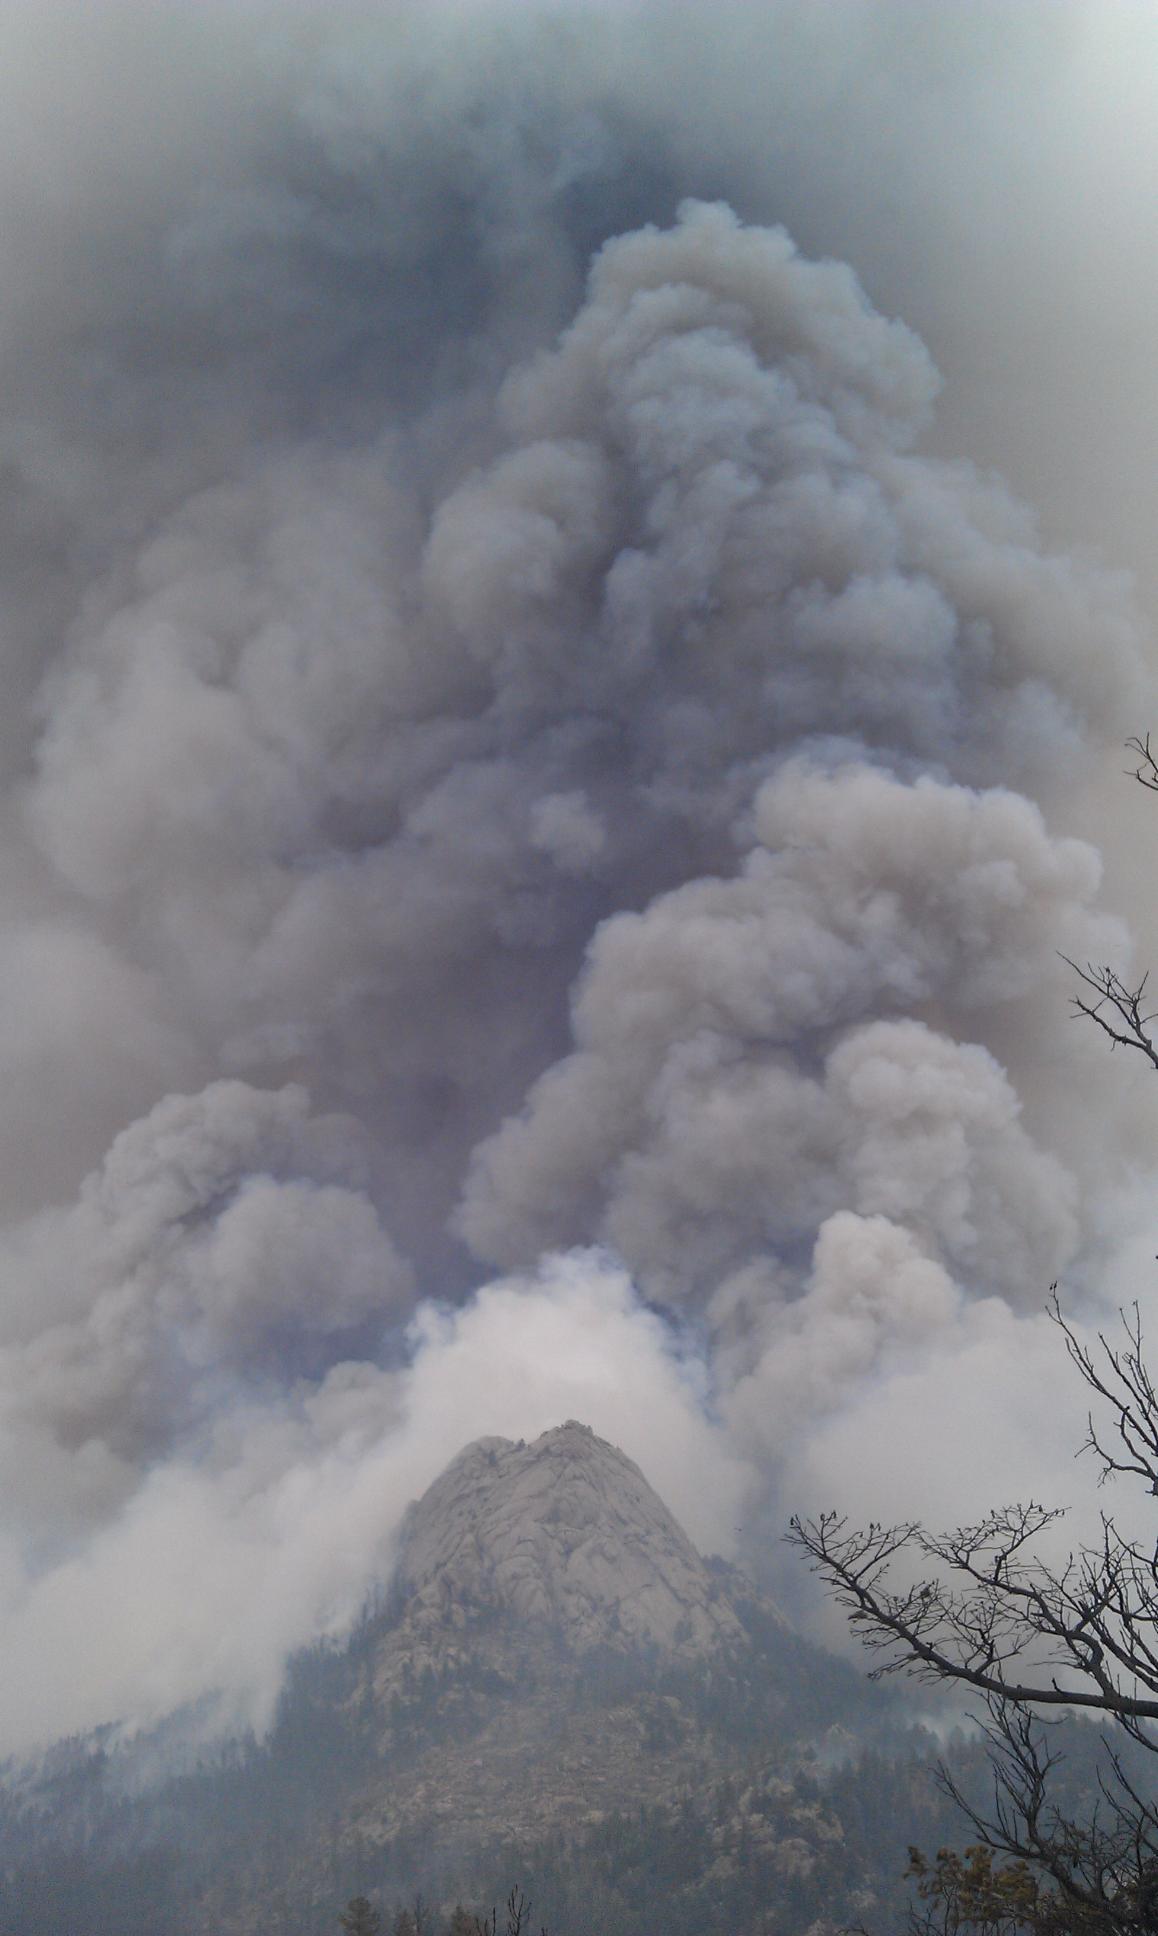 Forest Service - Dark gray smoke billows above a rocky mountain peak.